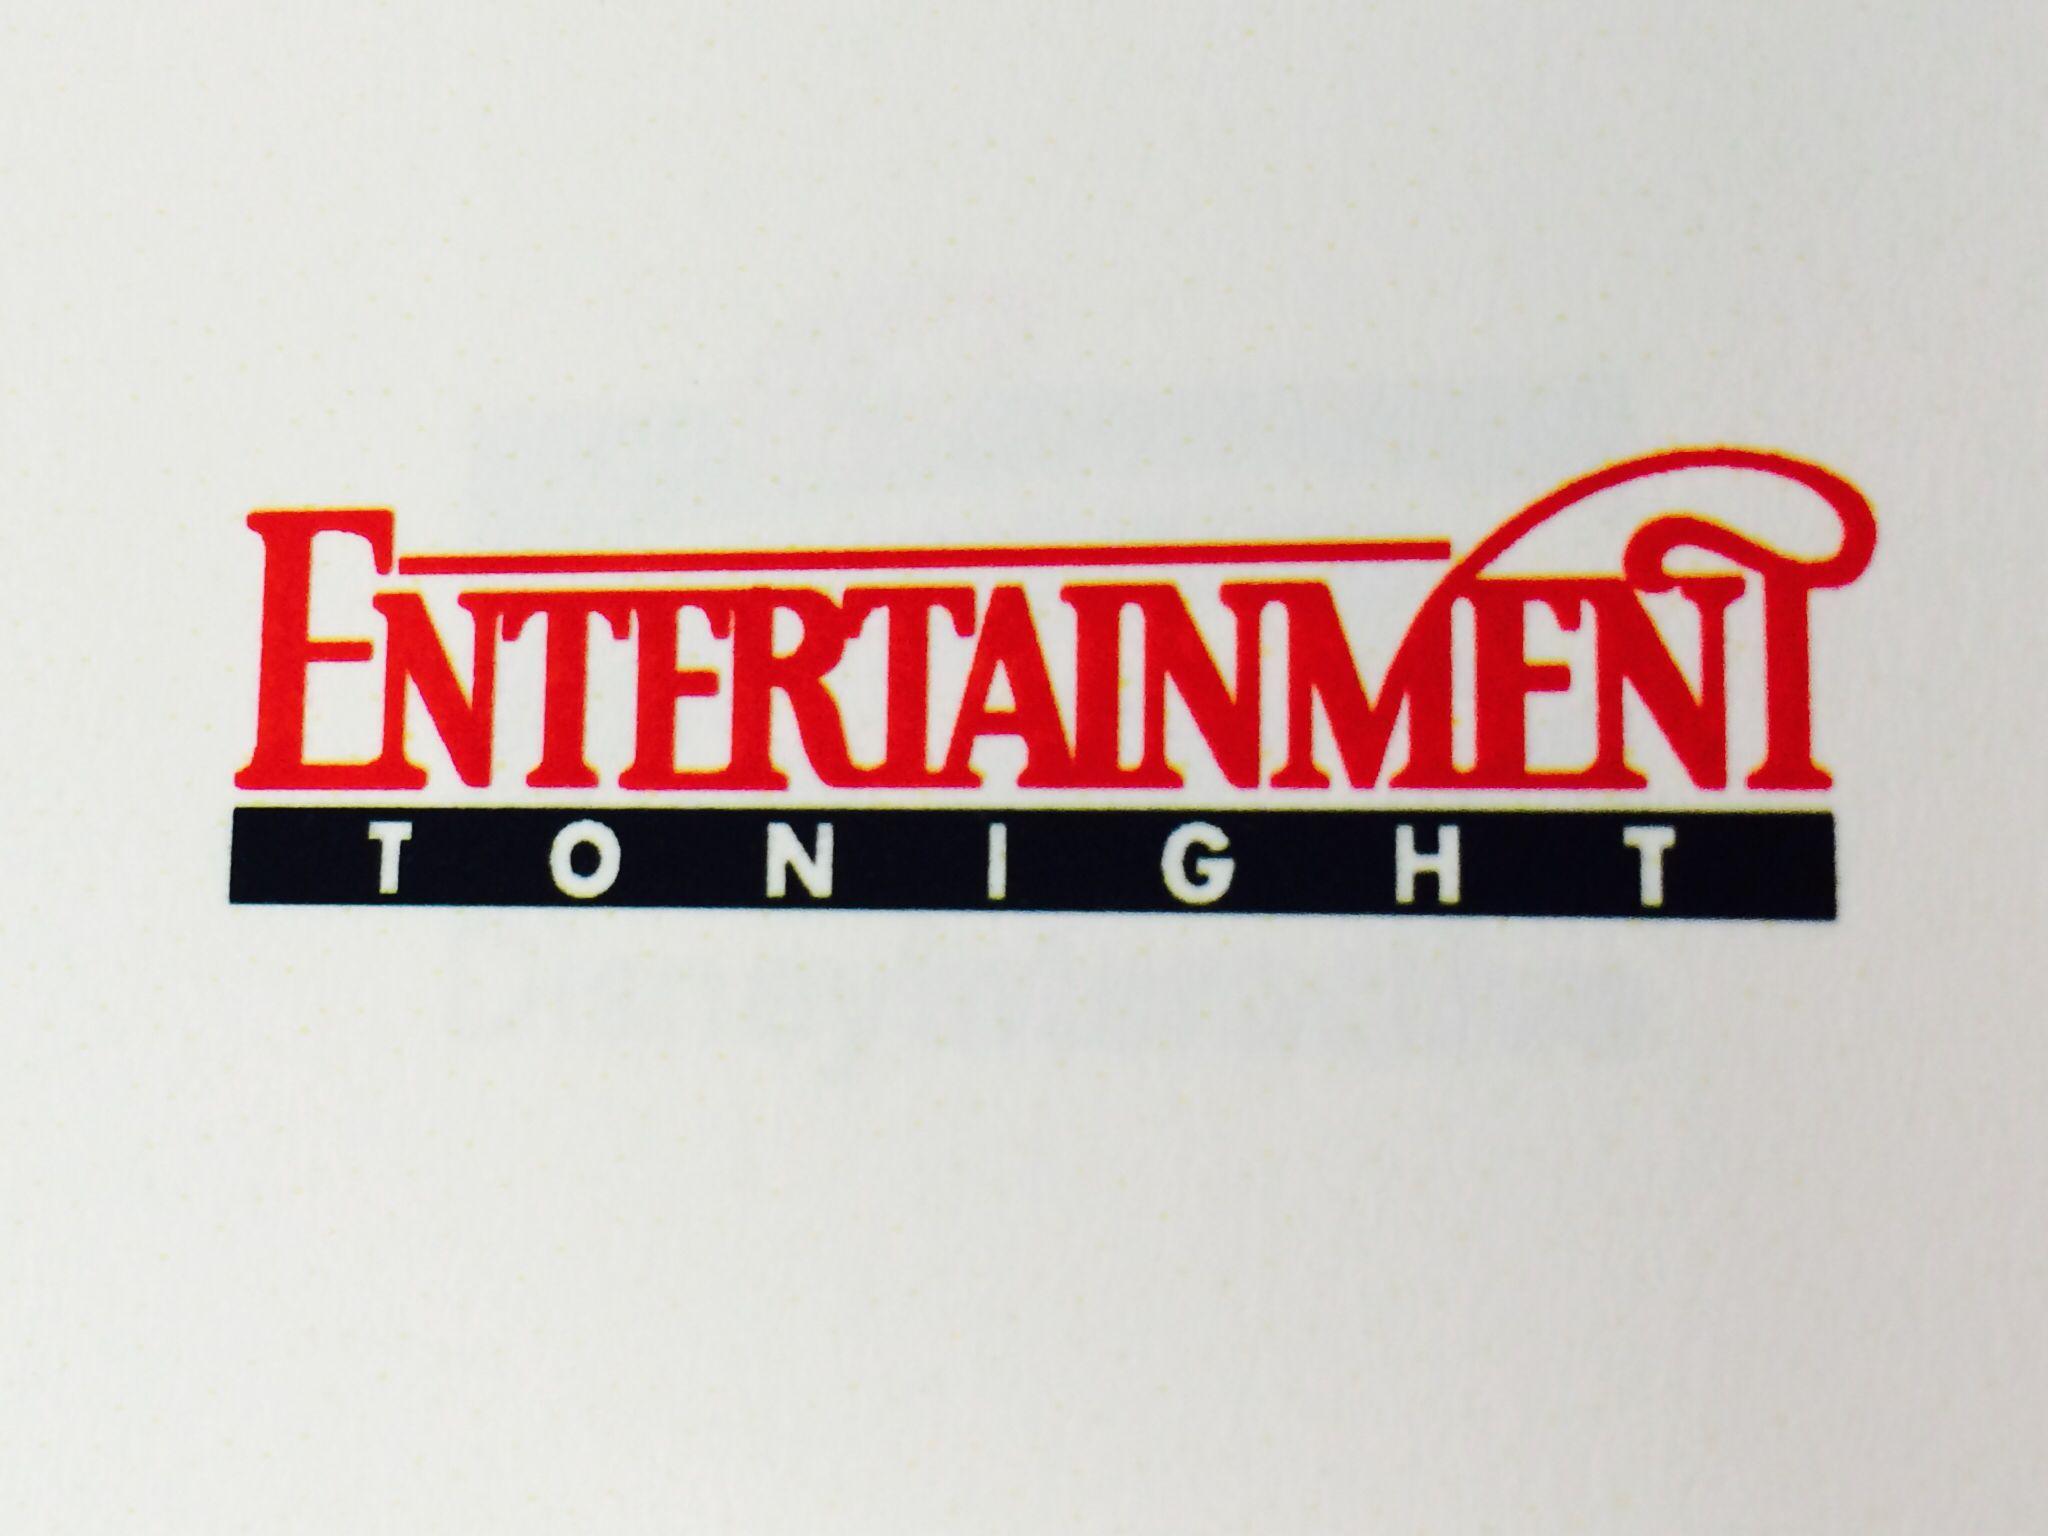 Tonight Logo - Entertainment Tonight logo | Logos by Rod Dyer Design. | Logos ...